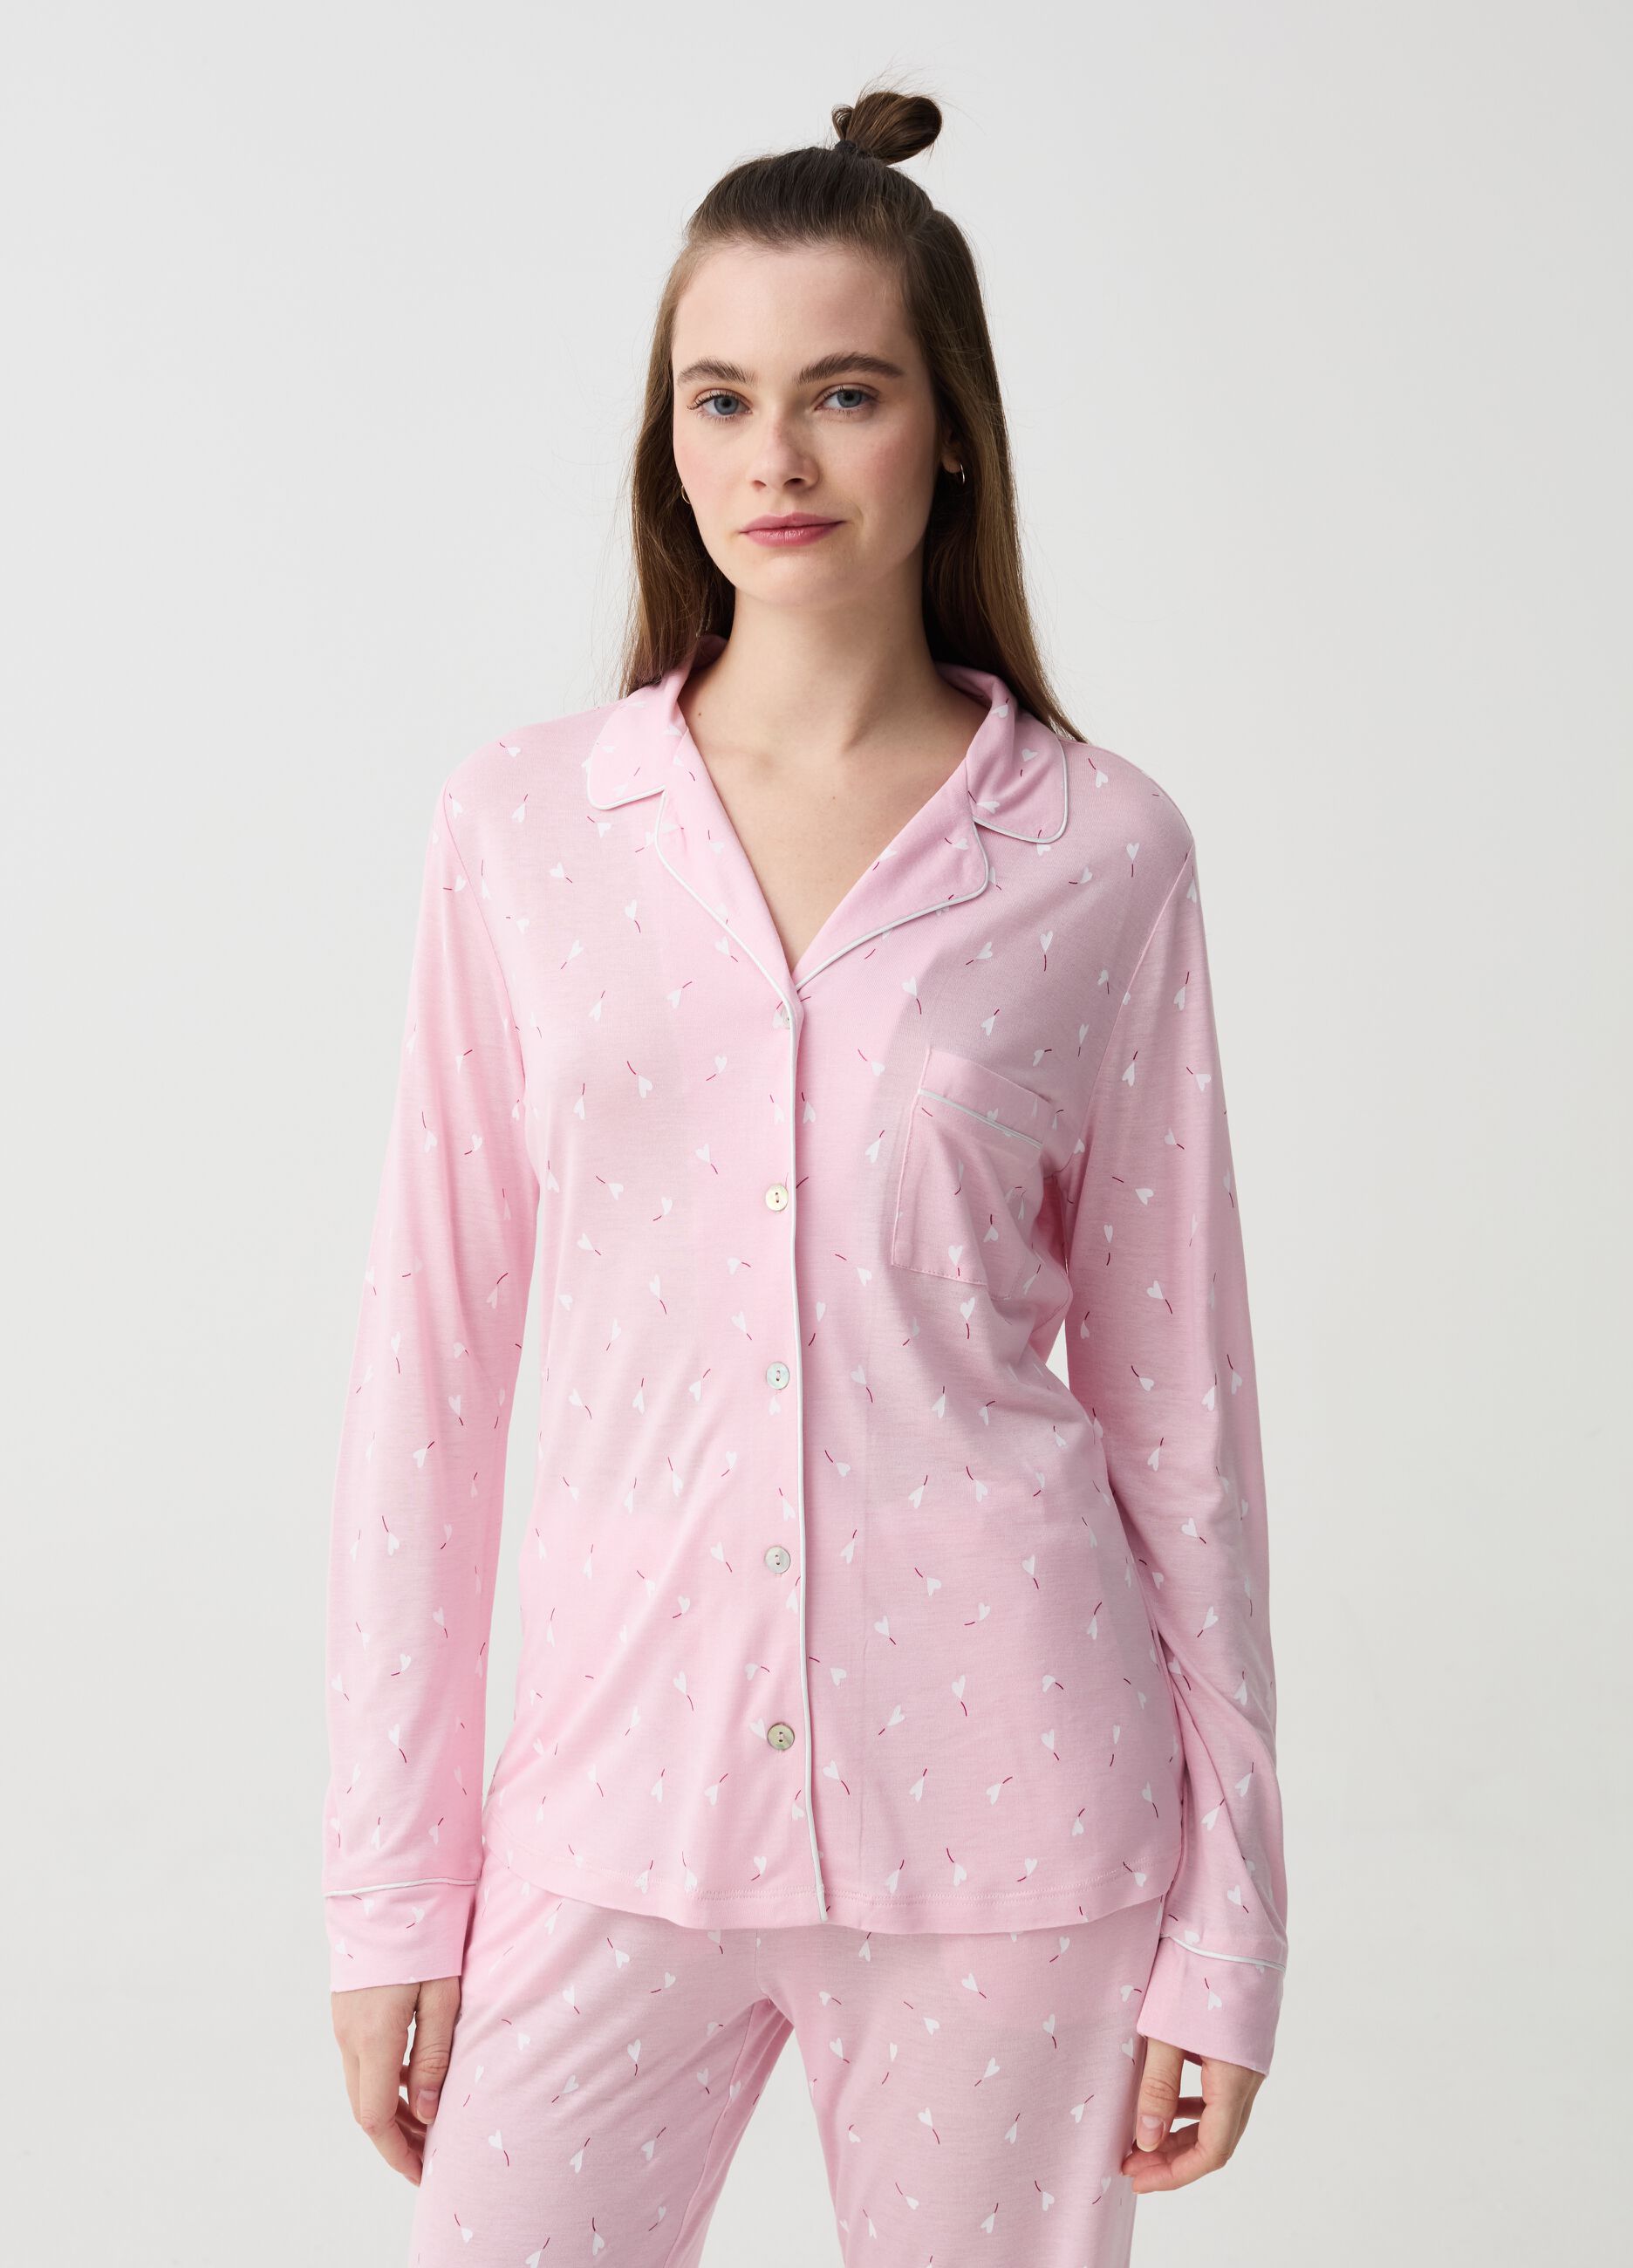 Viscose pyjama top with hearts pattern